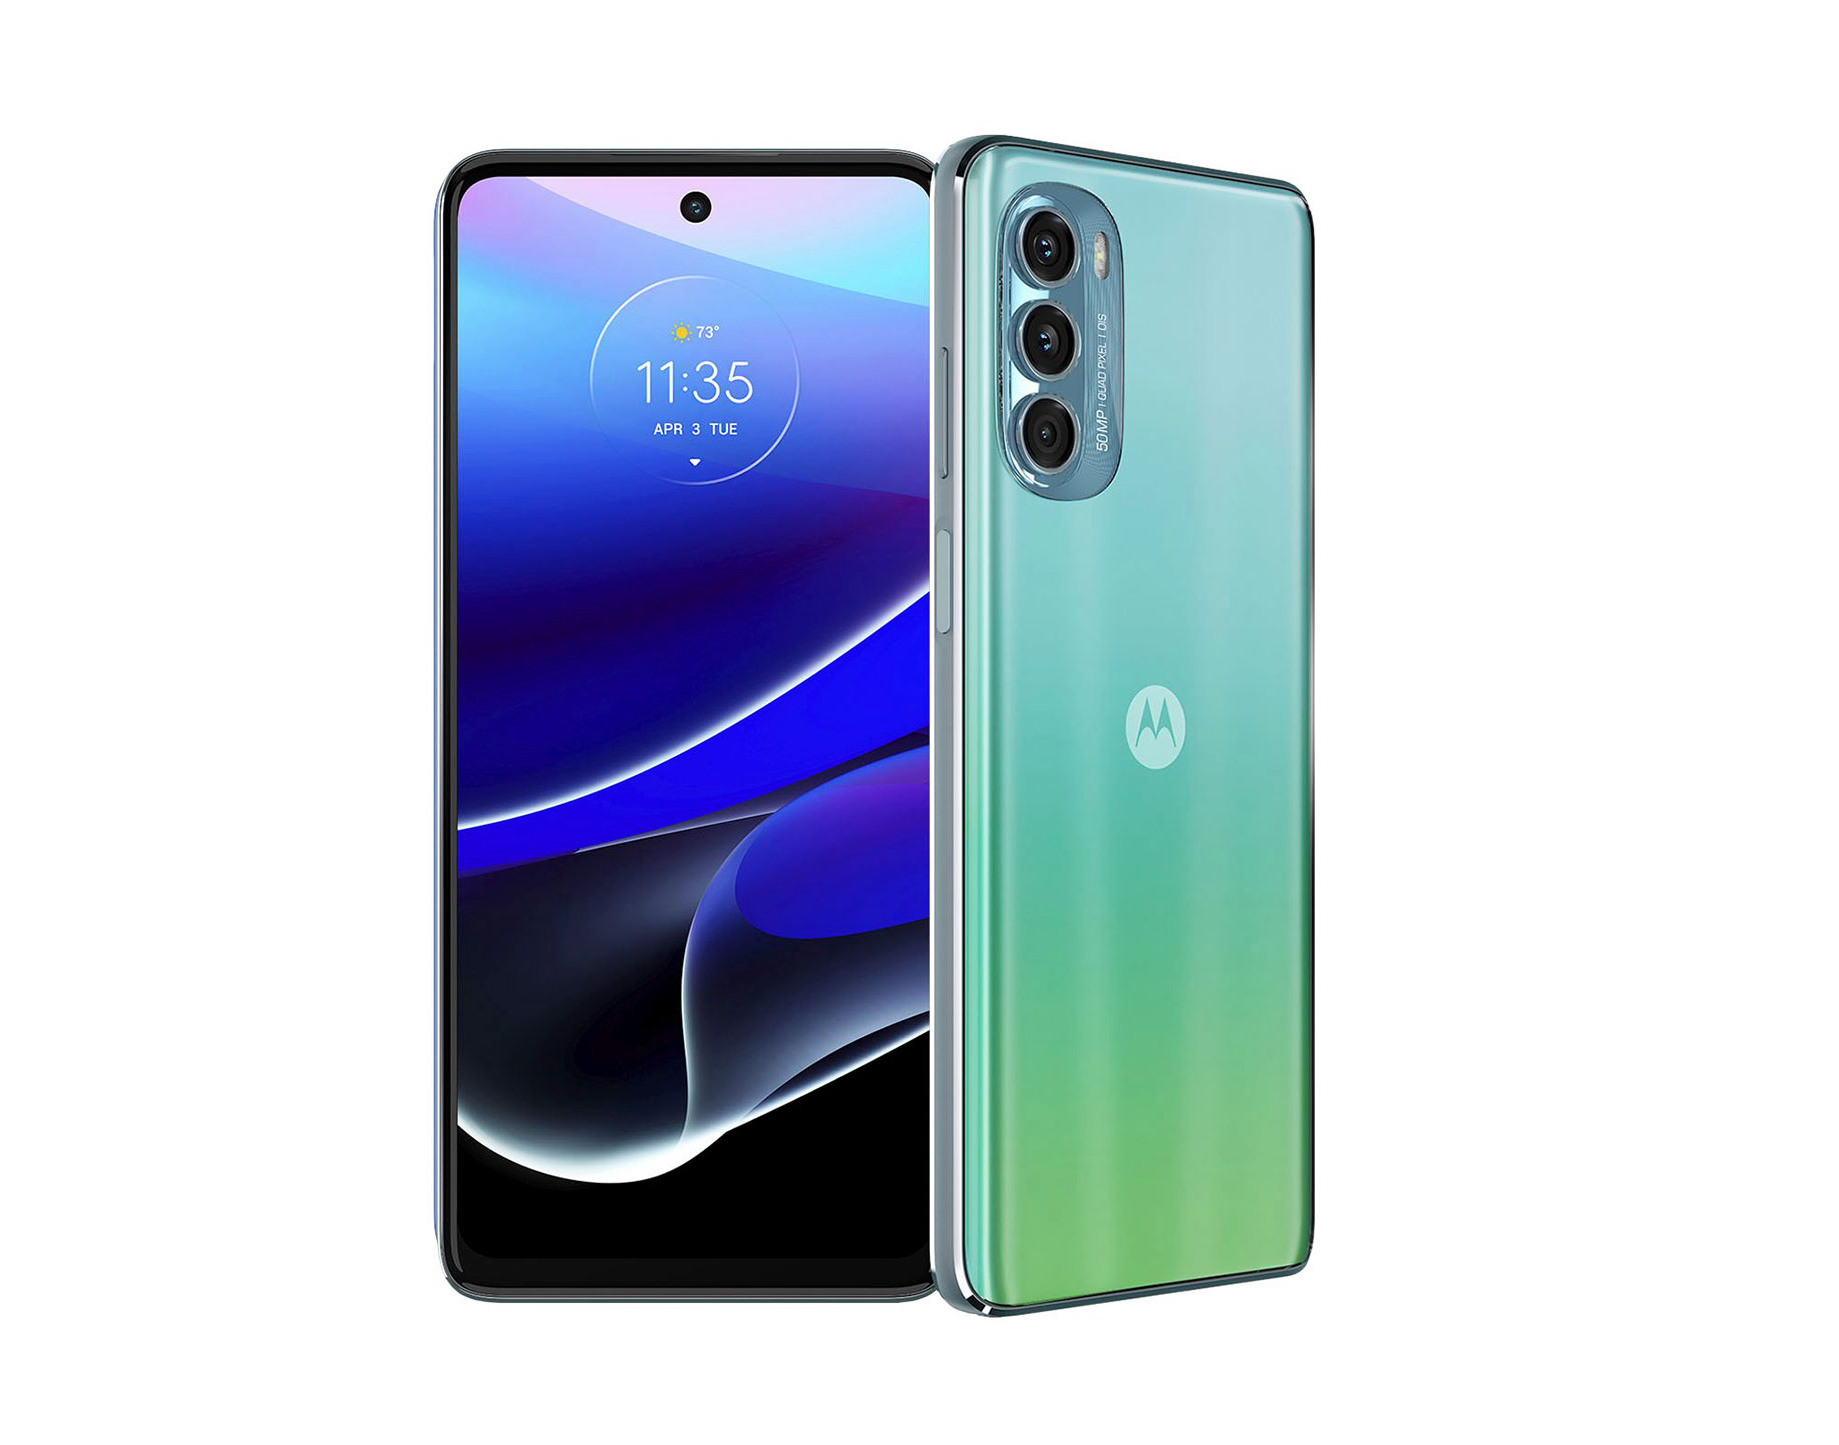 Maan tofu patroon Moto G 5G (2022): Upcoming Motorola mid-range smartphone leaks again with  stylus support - NotebookCheck.net News